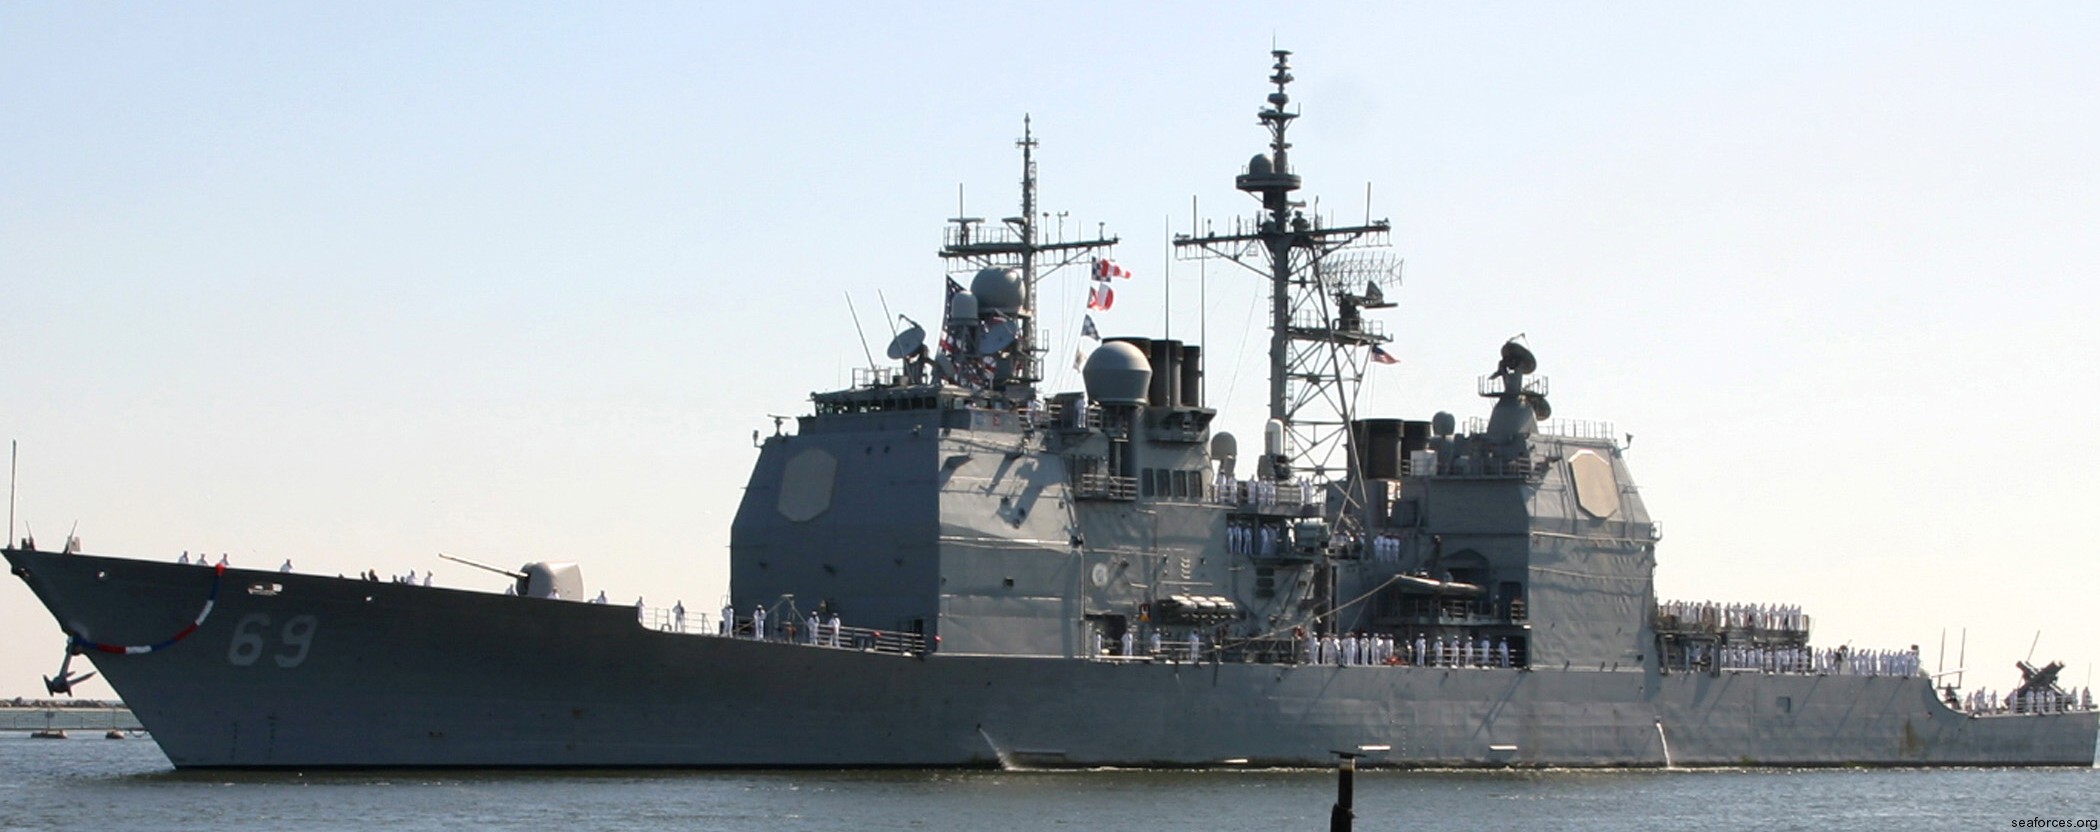 cg-69 uss vicksburg ticonderoga class guided missile cruiser us navy 35 naval station mayport florida